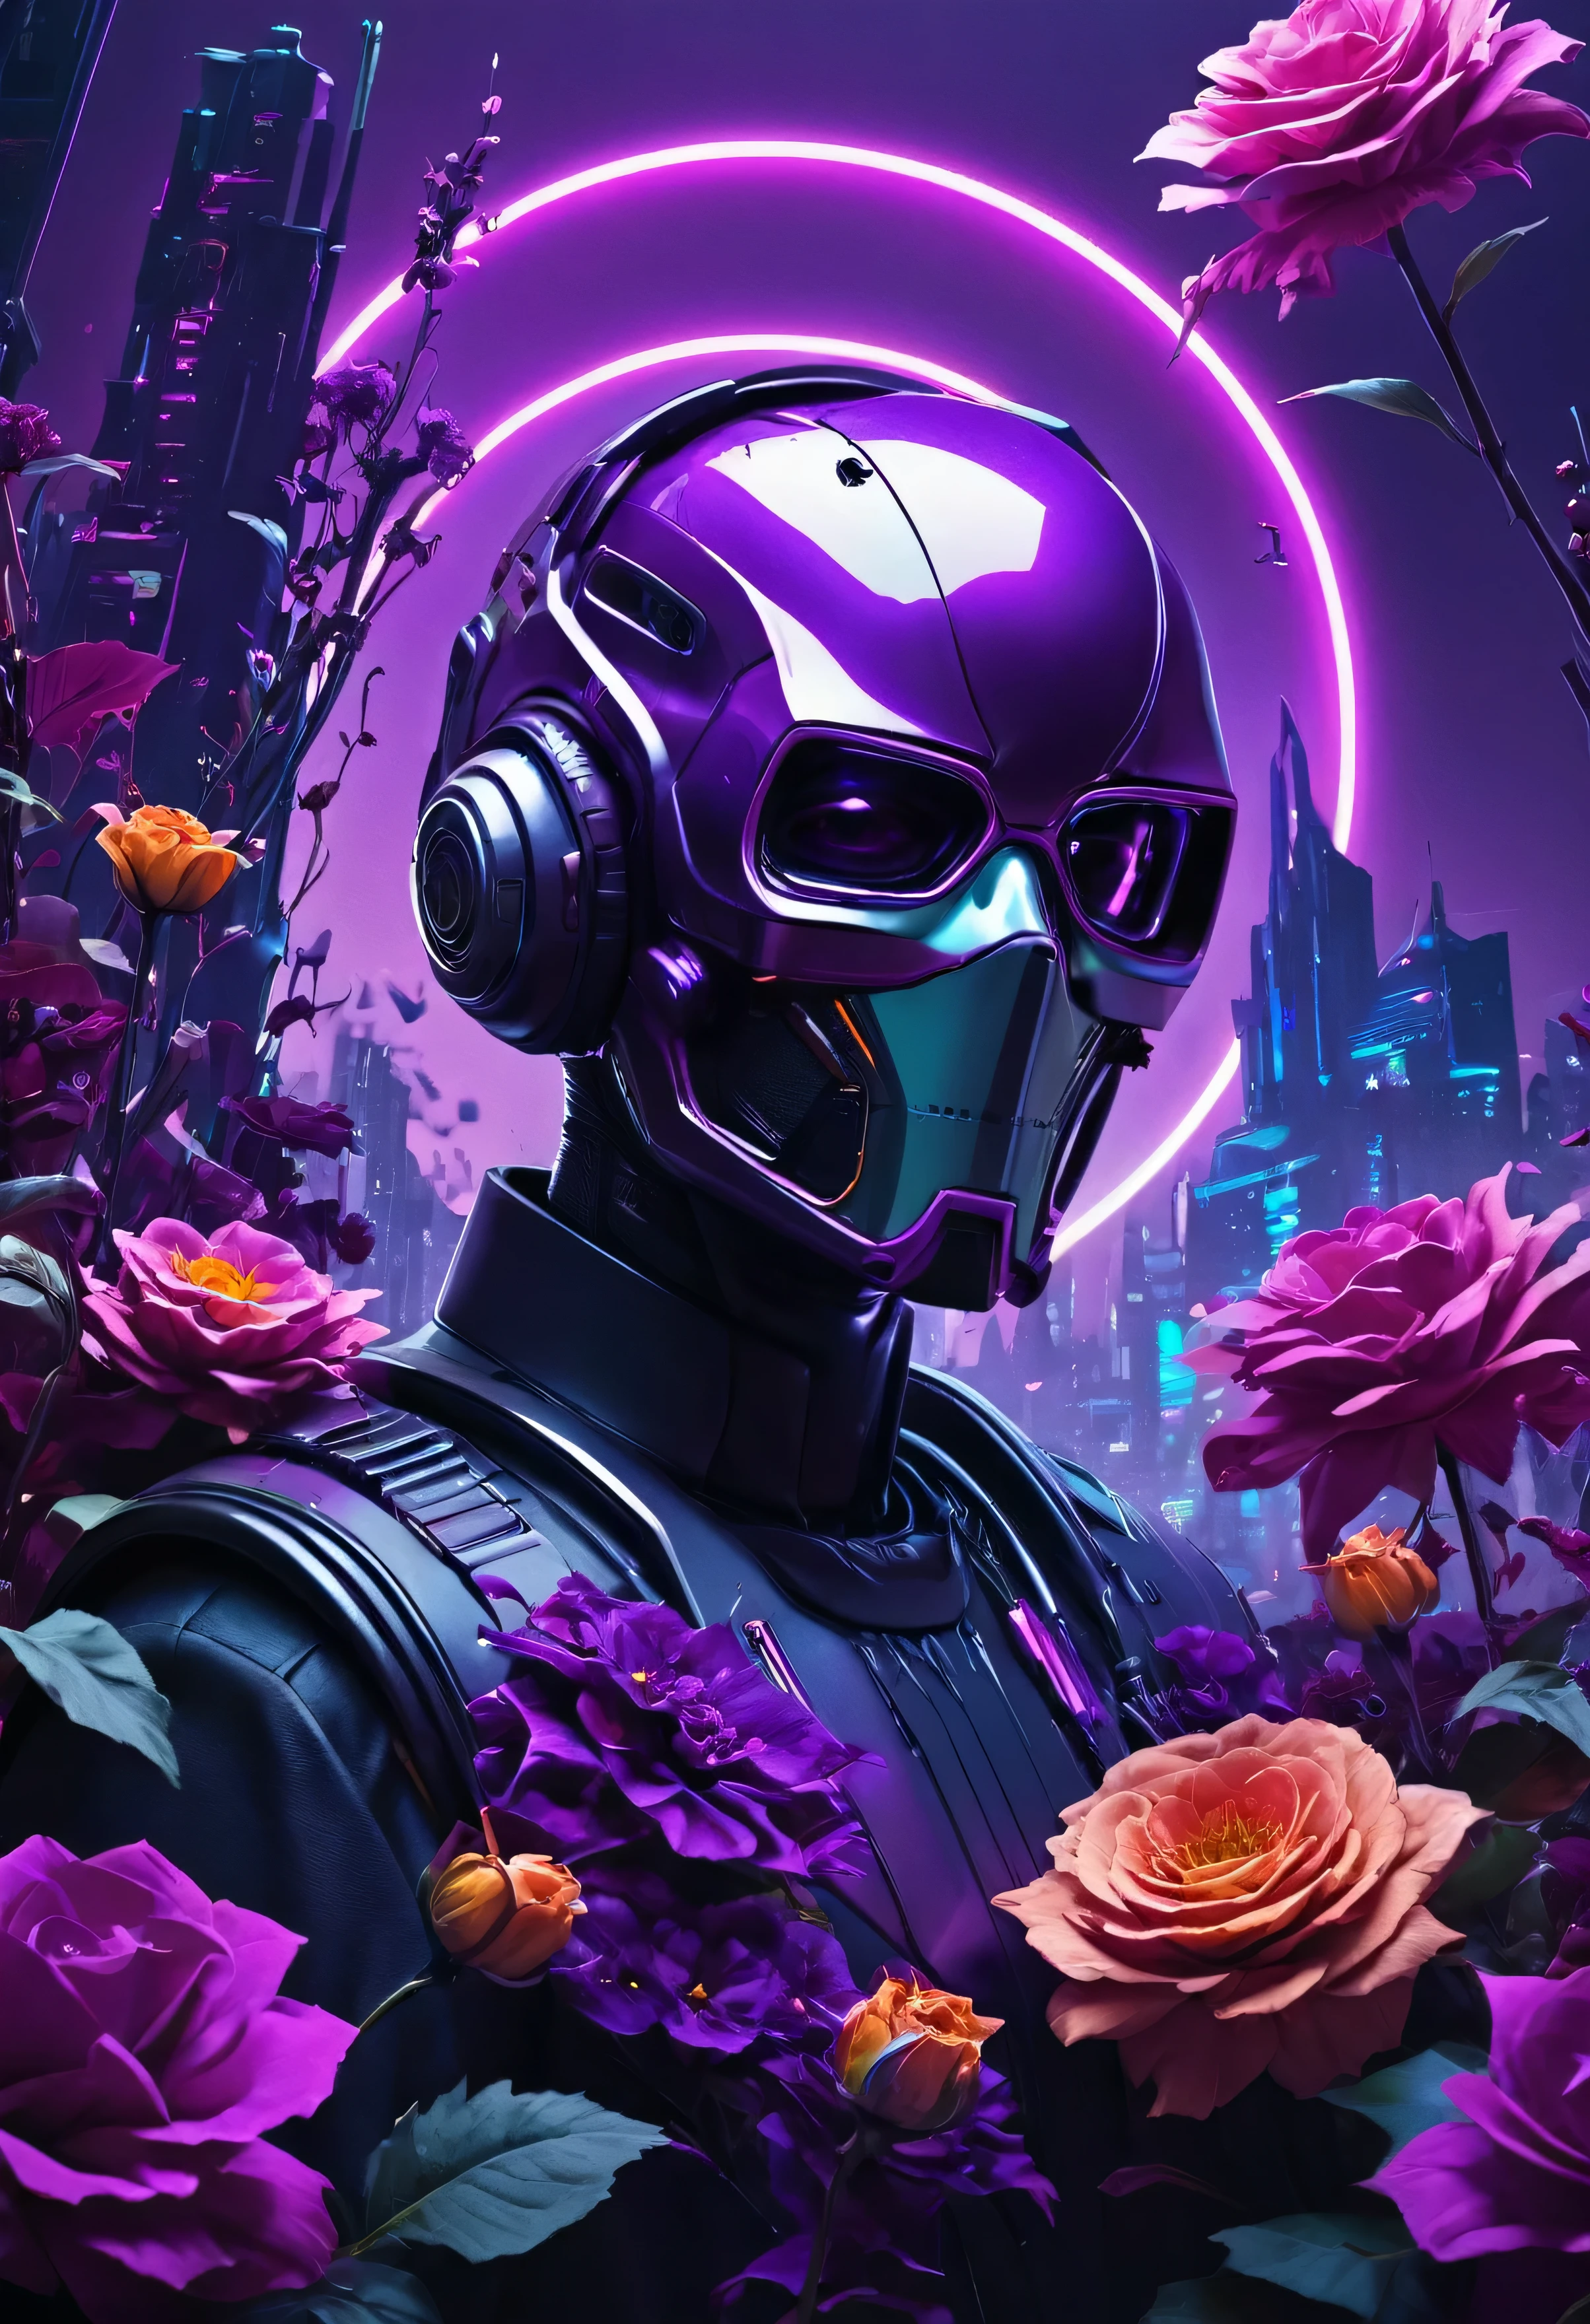 Cinematic vision, abstrait, sin humanos, Cyberwave Cyberpunk Halloween Themed Poster with Flowers, no human, Metallic elements, Acidic colors: Unripe, purple